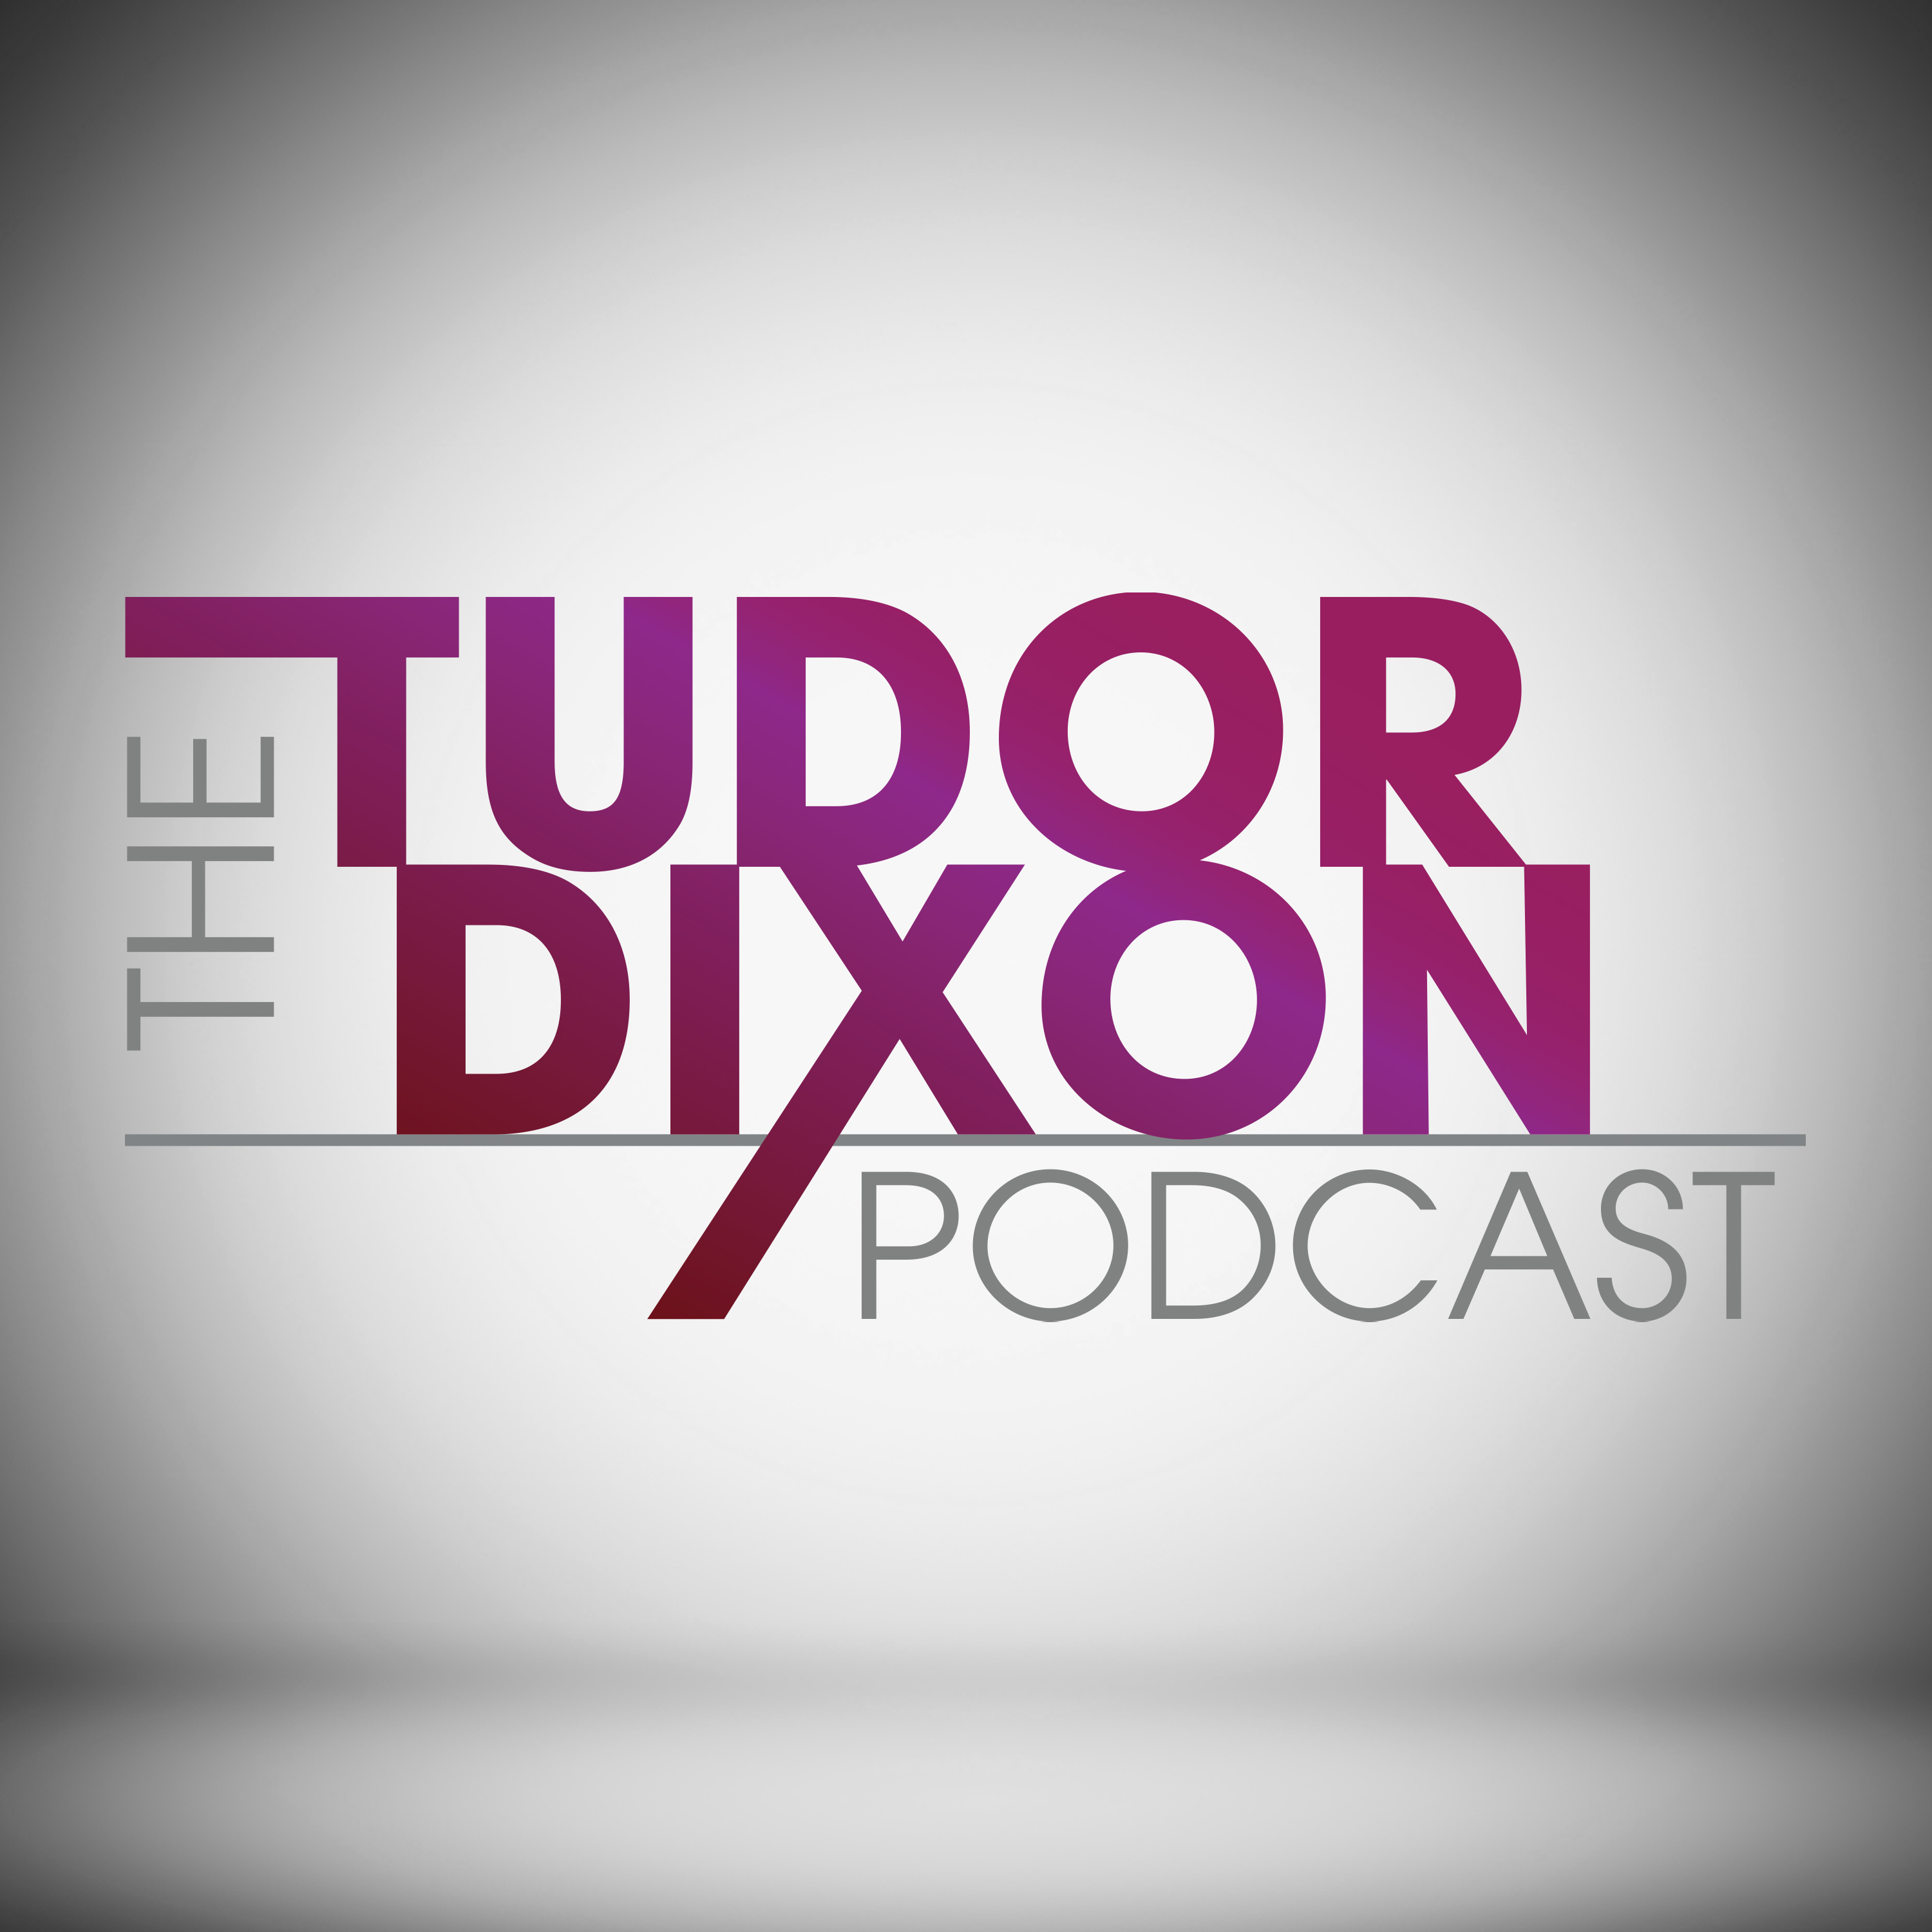 The Tudor Dixon Podcast: Courage is a Habit with Alvin Lui